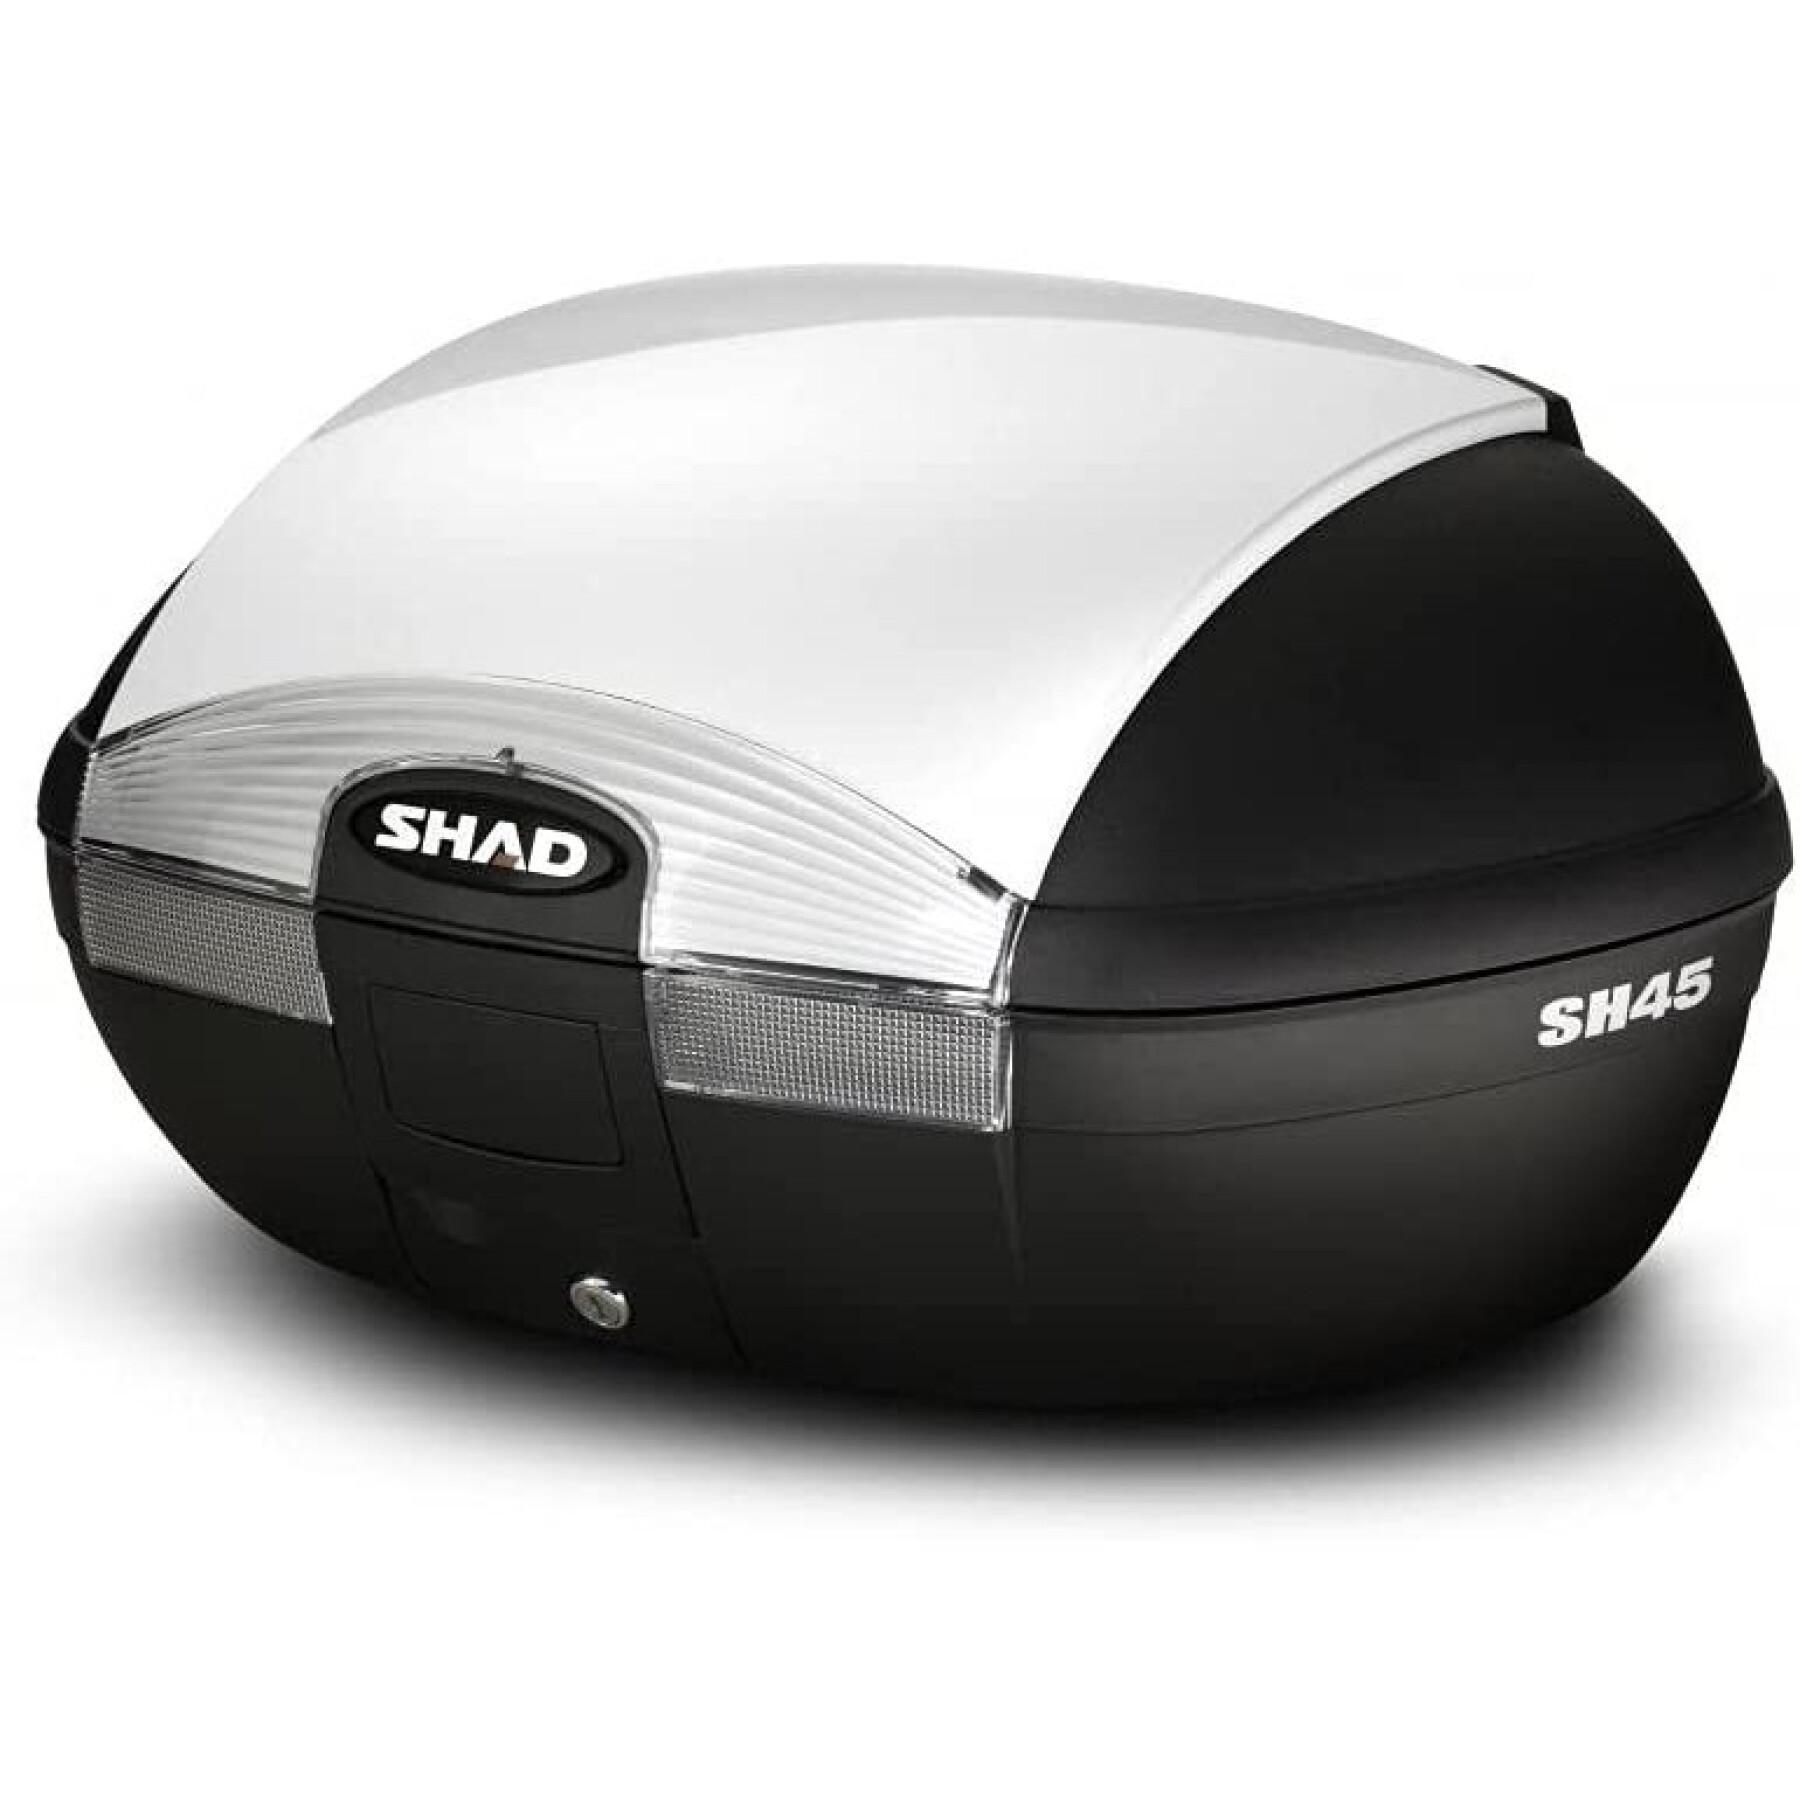 Tapa del maletín superior Shad sh45